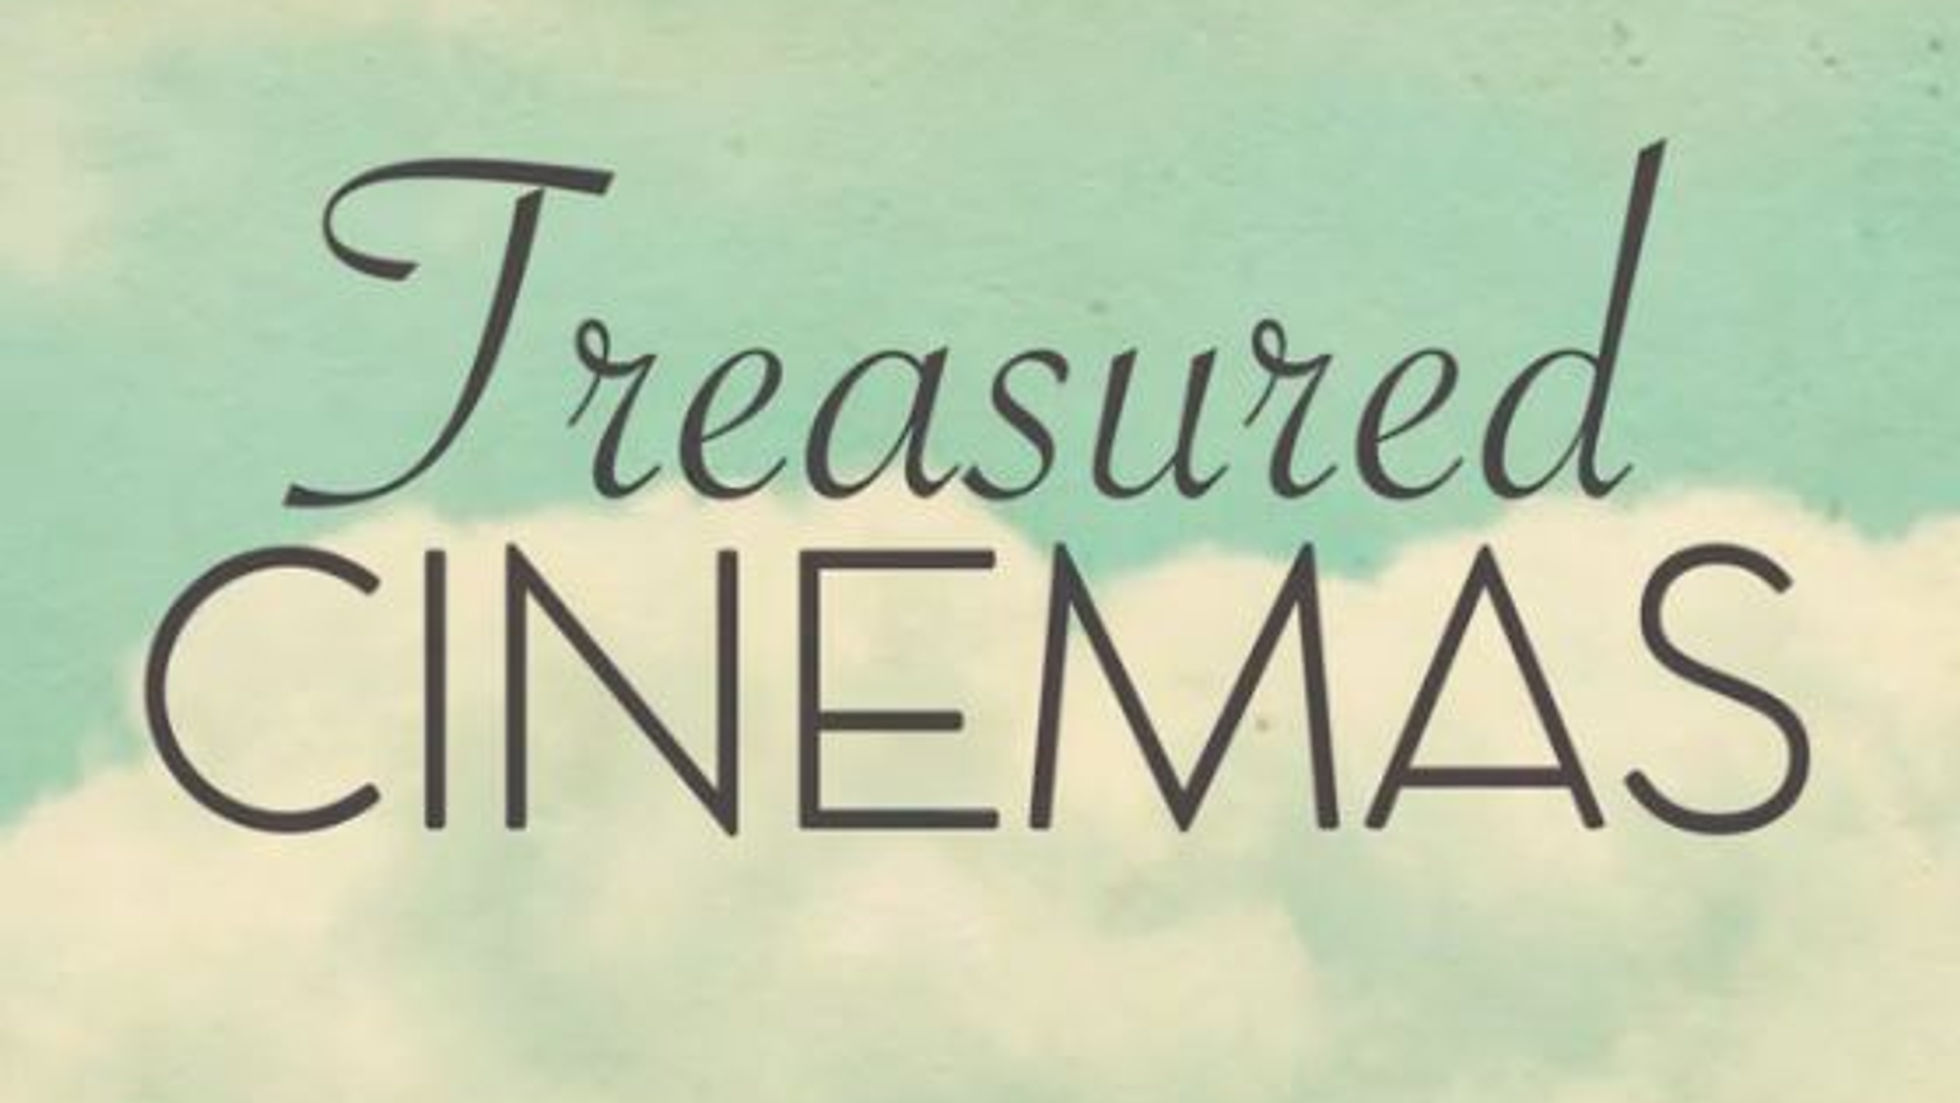 Treasured Cinemas